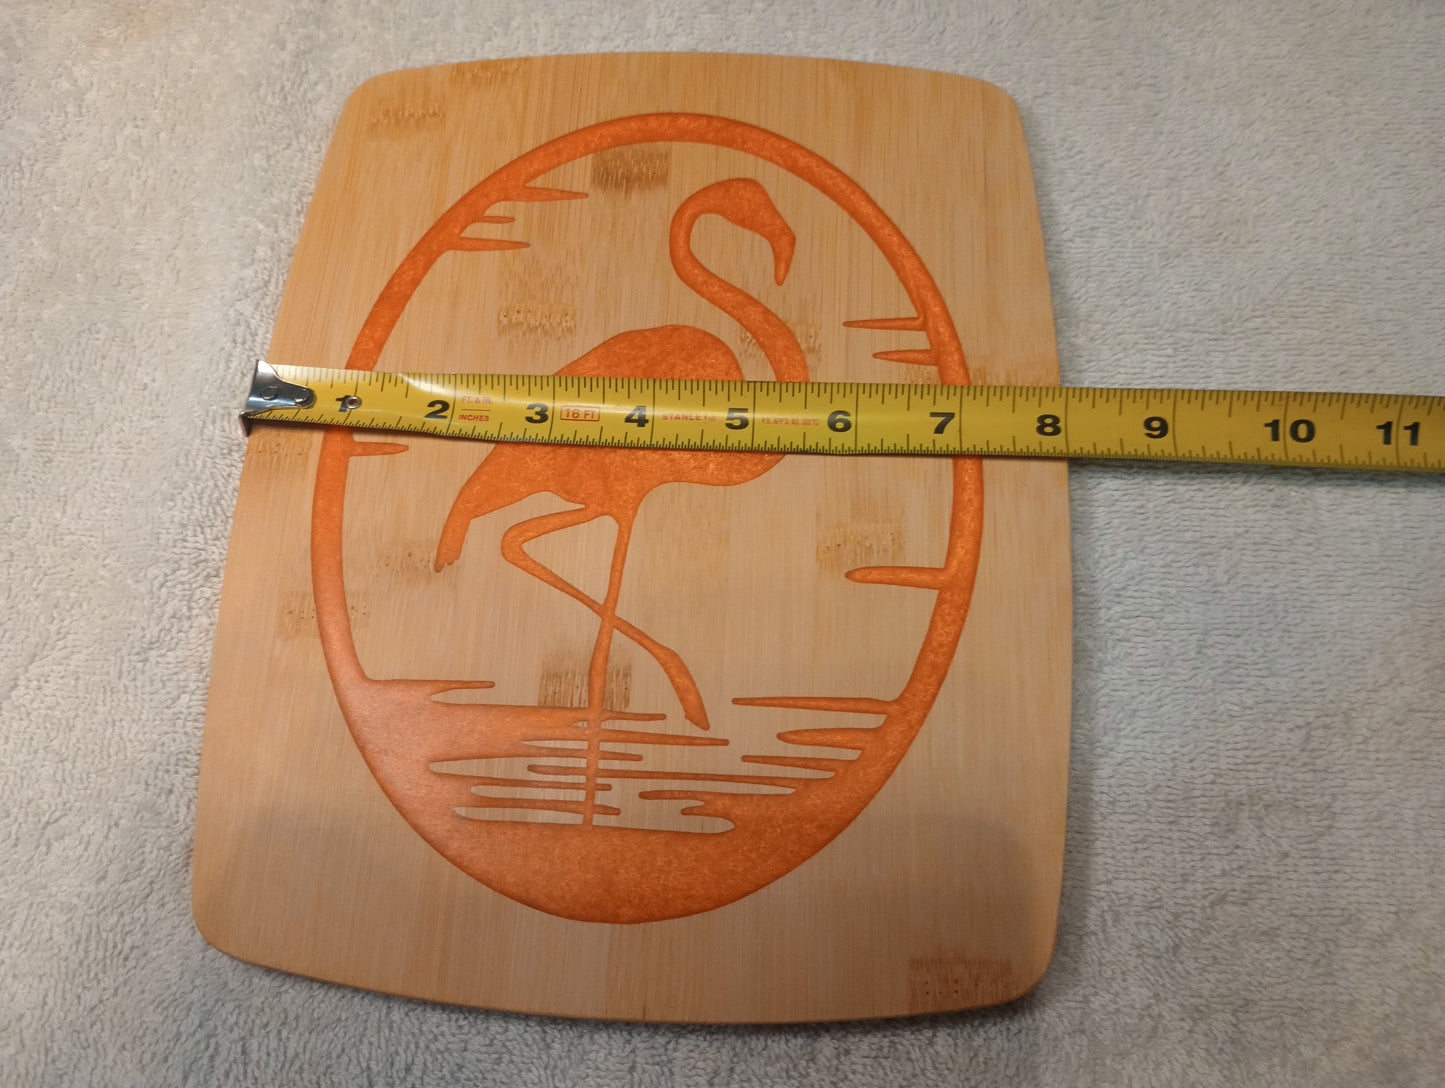 Bamboo cutting board with food grade epoxy inlays - flamingo